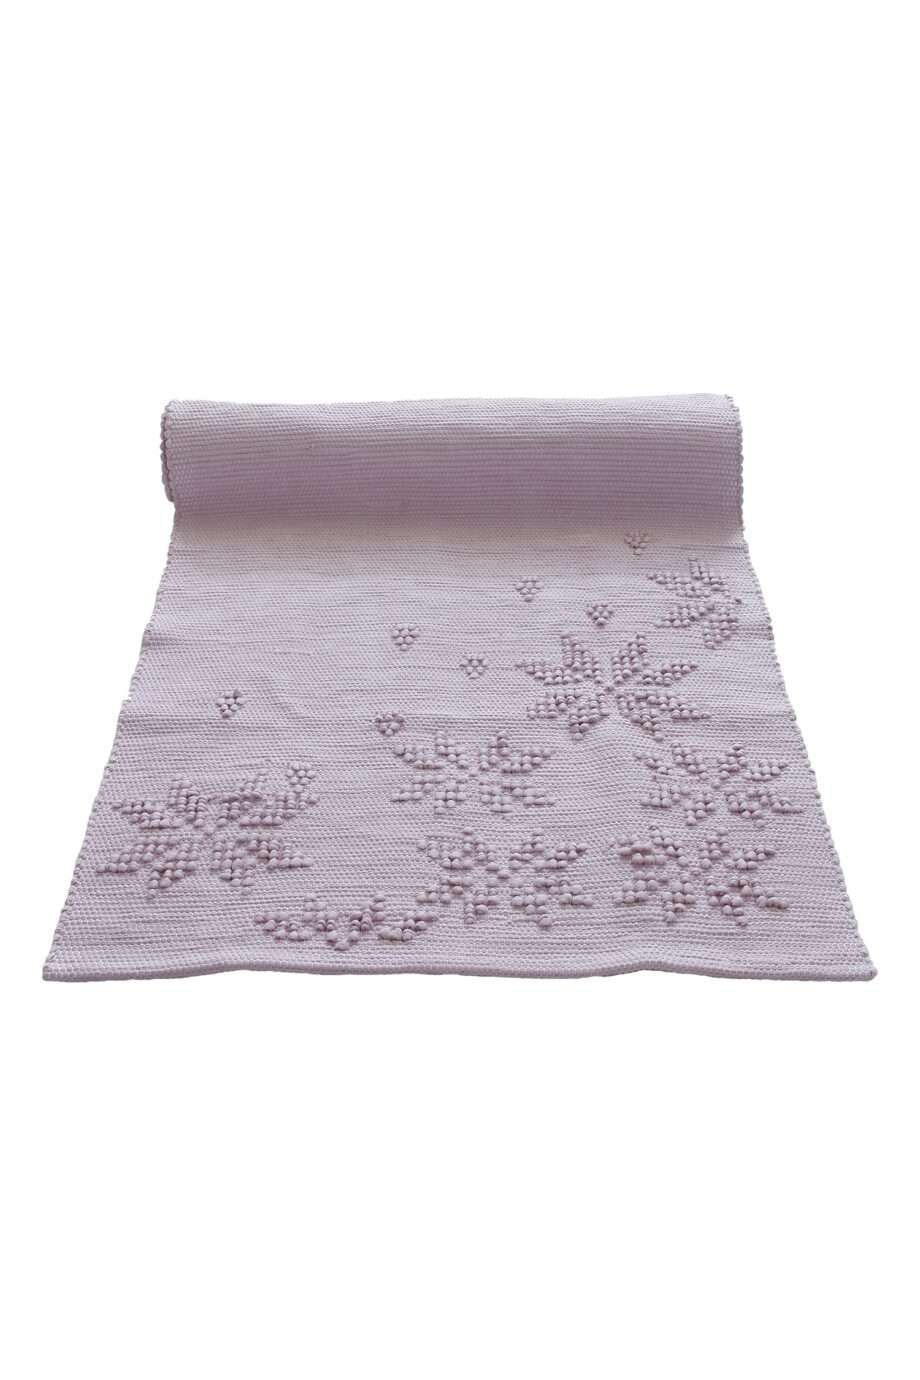 woven cotton floor mat snowflakes powder rose small